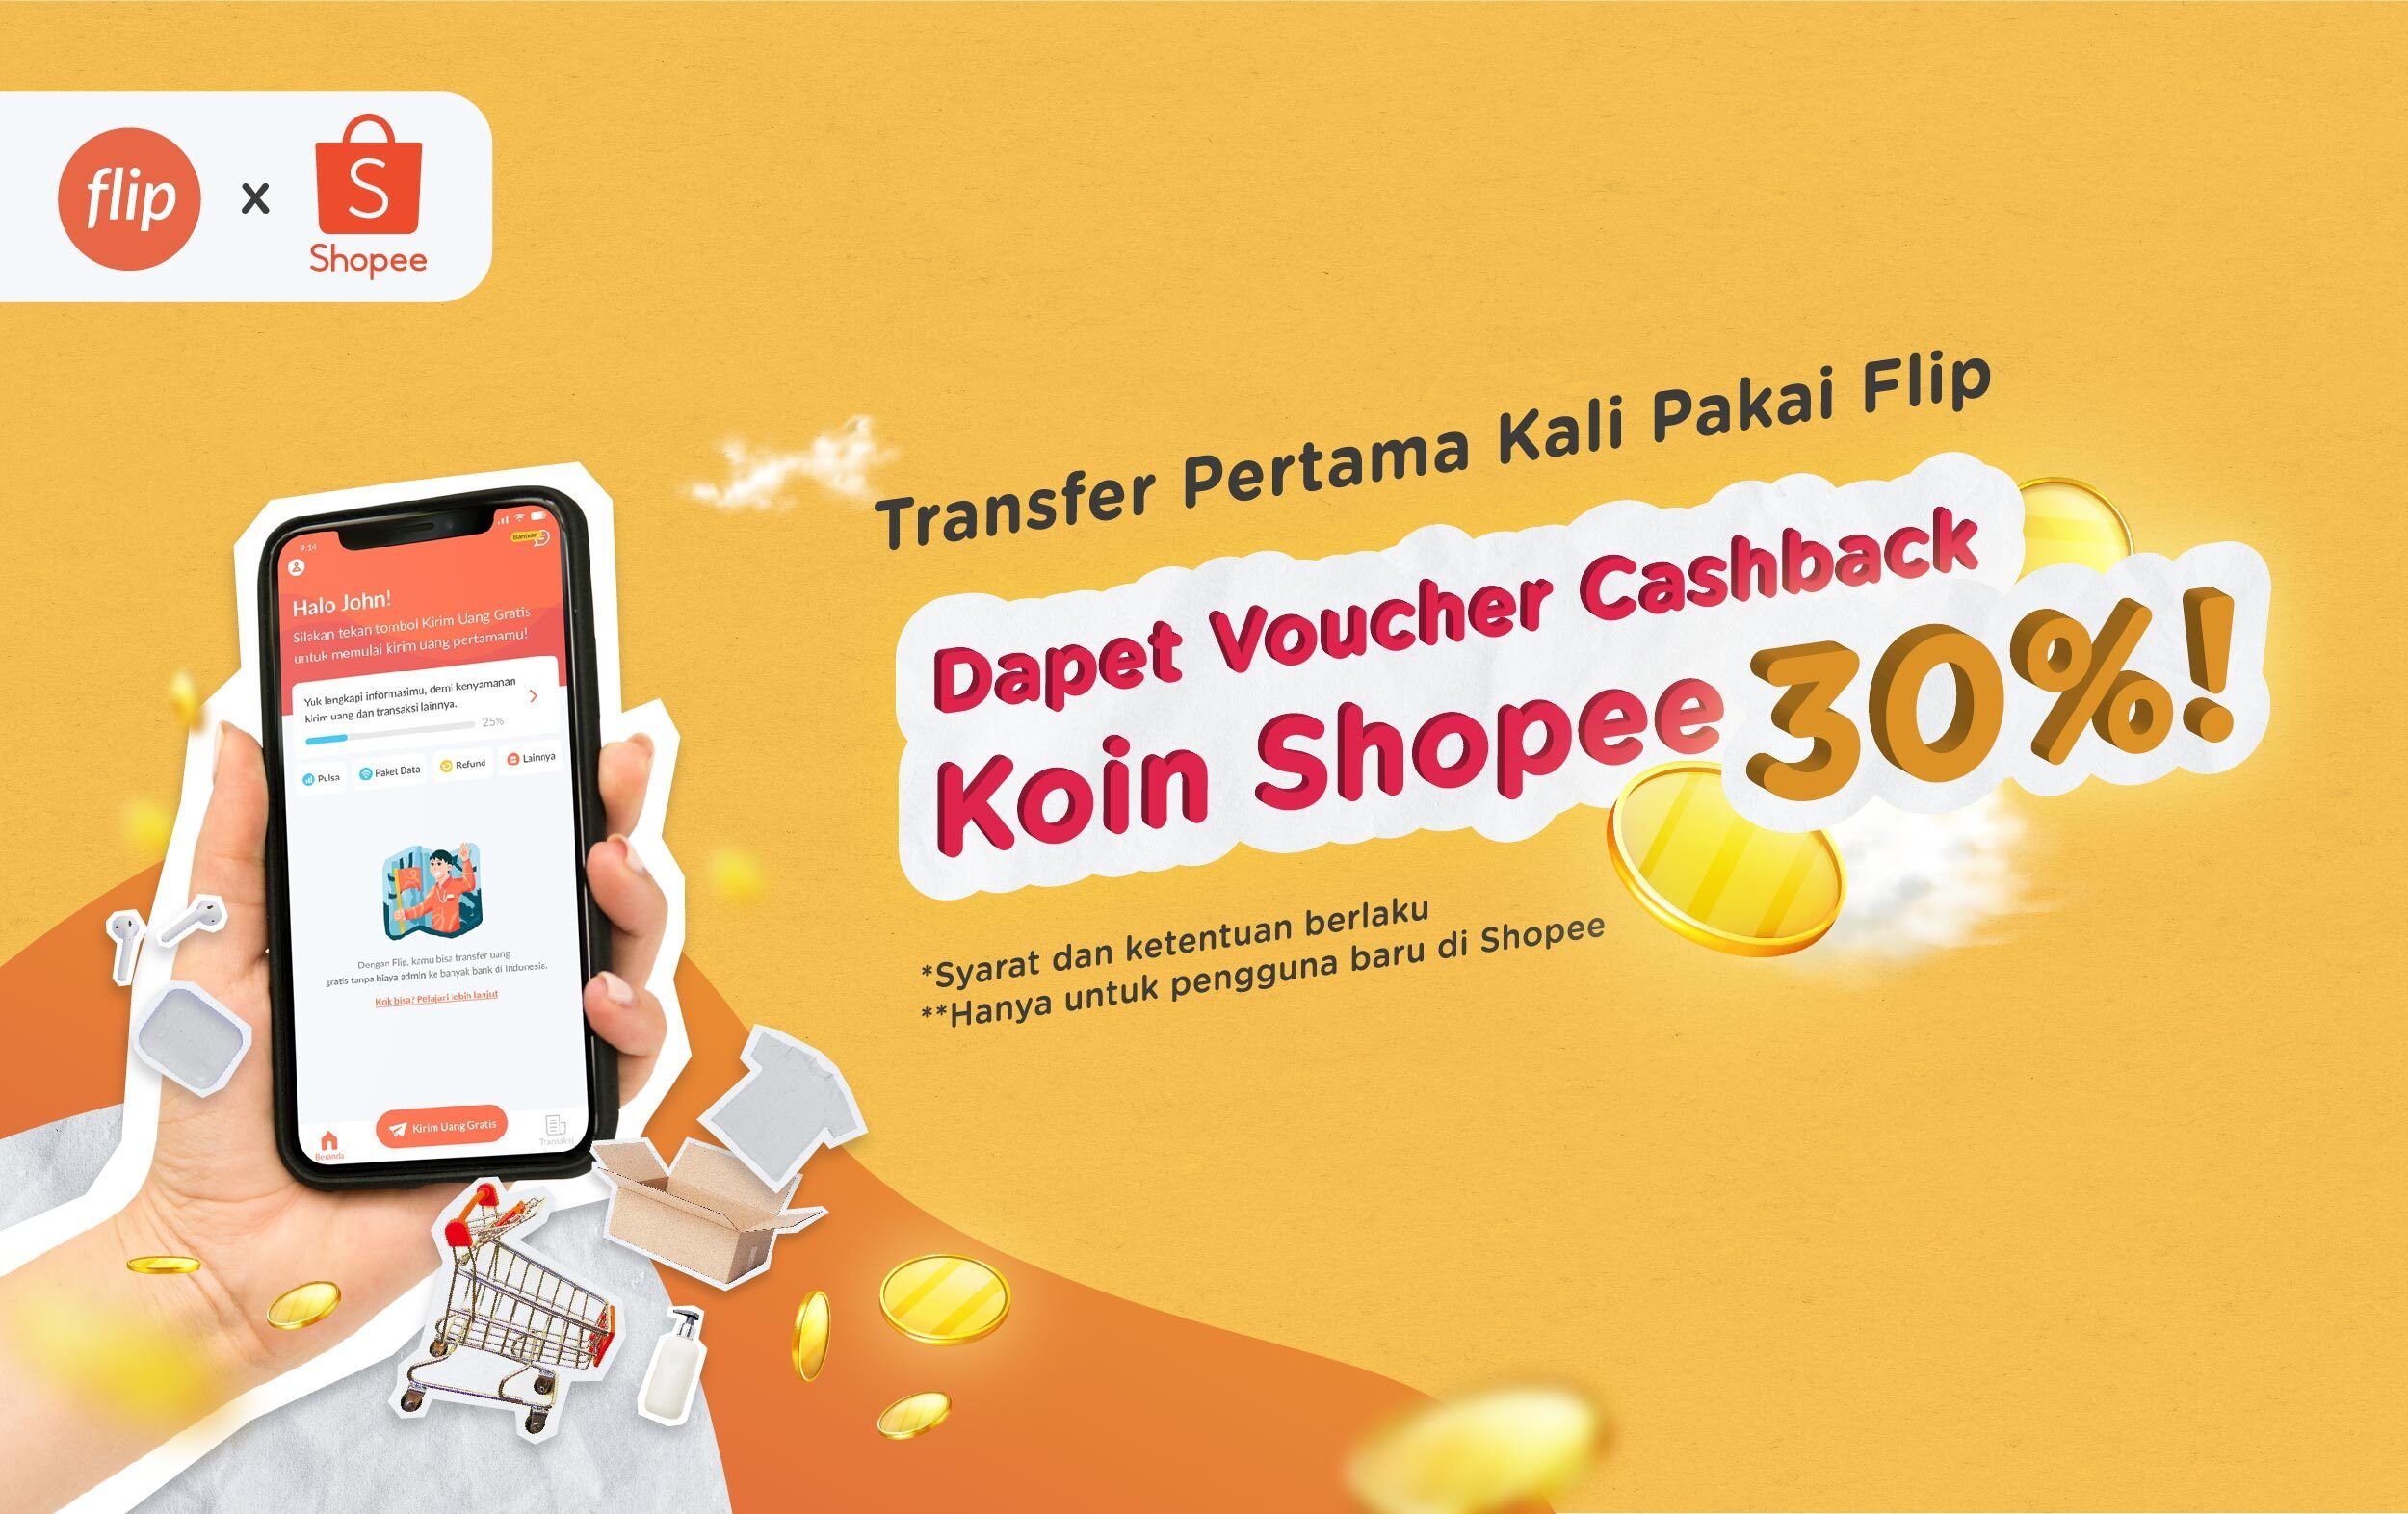 Promo Pengguna Baru: Voucher Cashback 30% Koin Shopee!